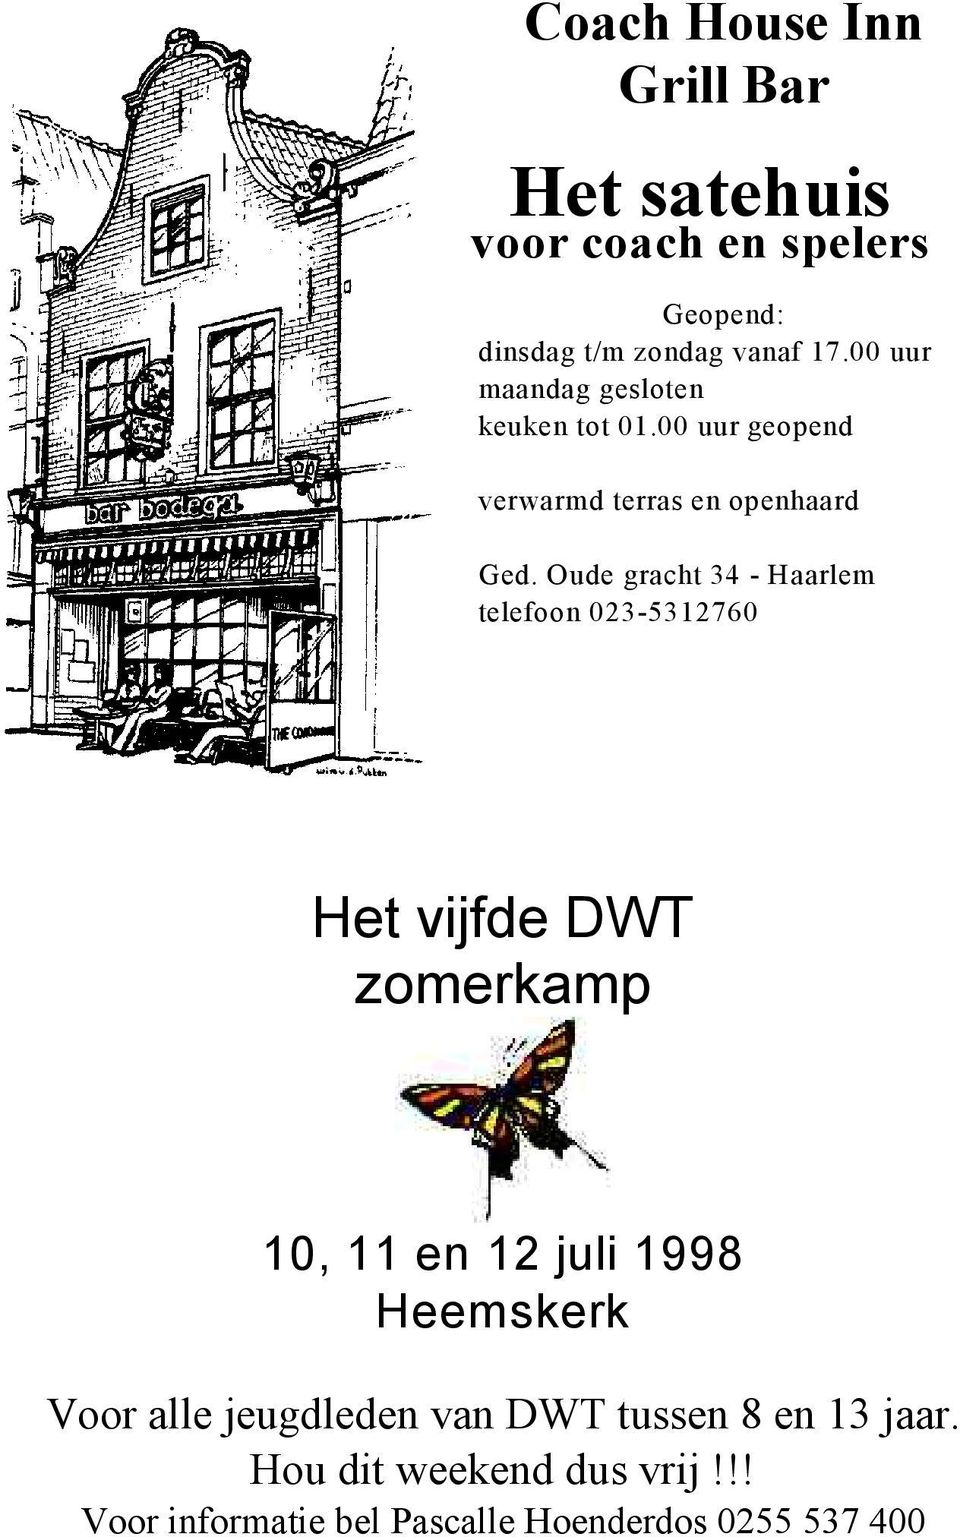 Oude gracht 34 - Haarlem telefoon 023-5312760 Het vijfde DWT zomerkamp 10, 11 en 12 juli 1998 Heemskerk